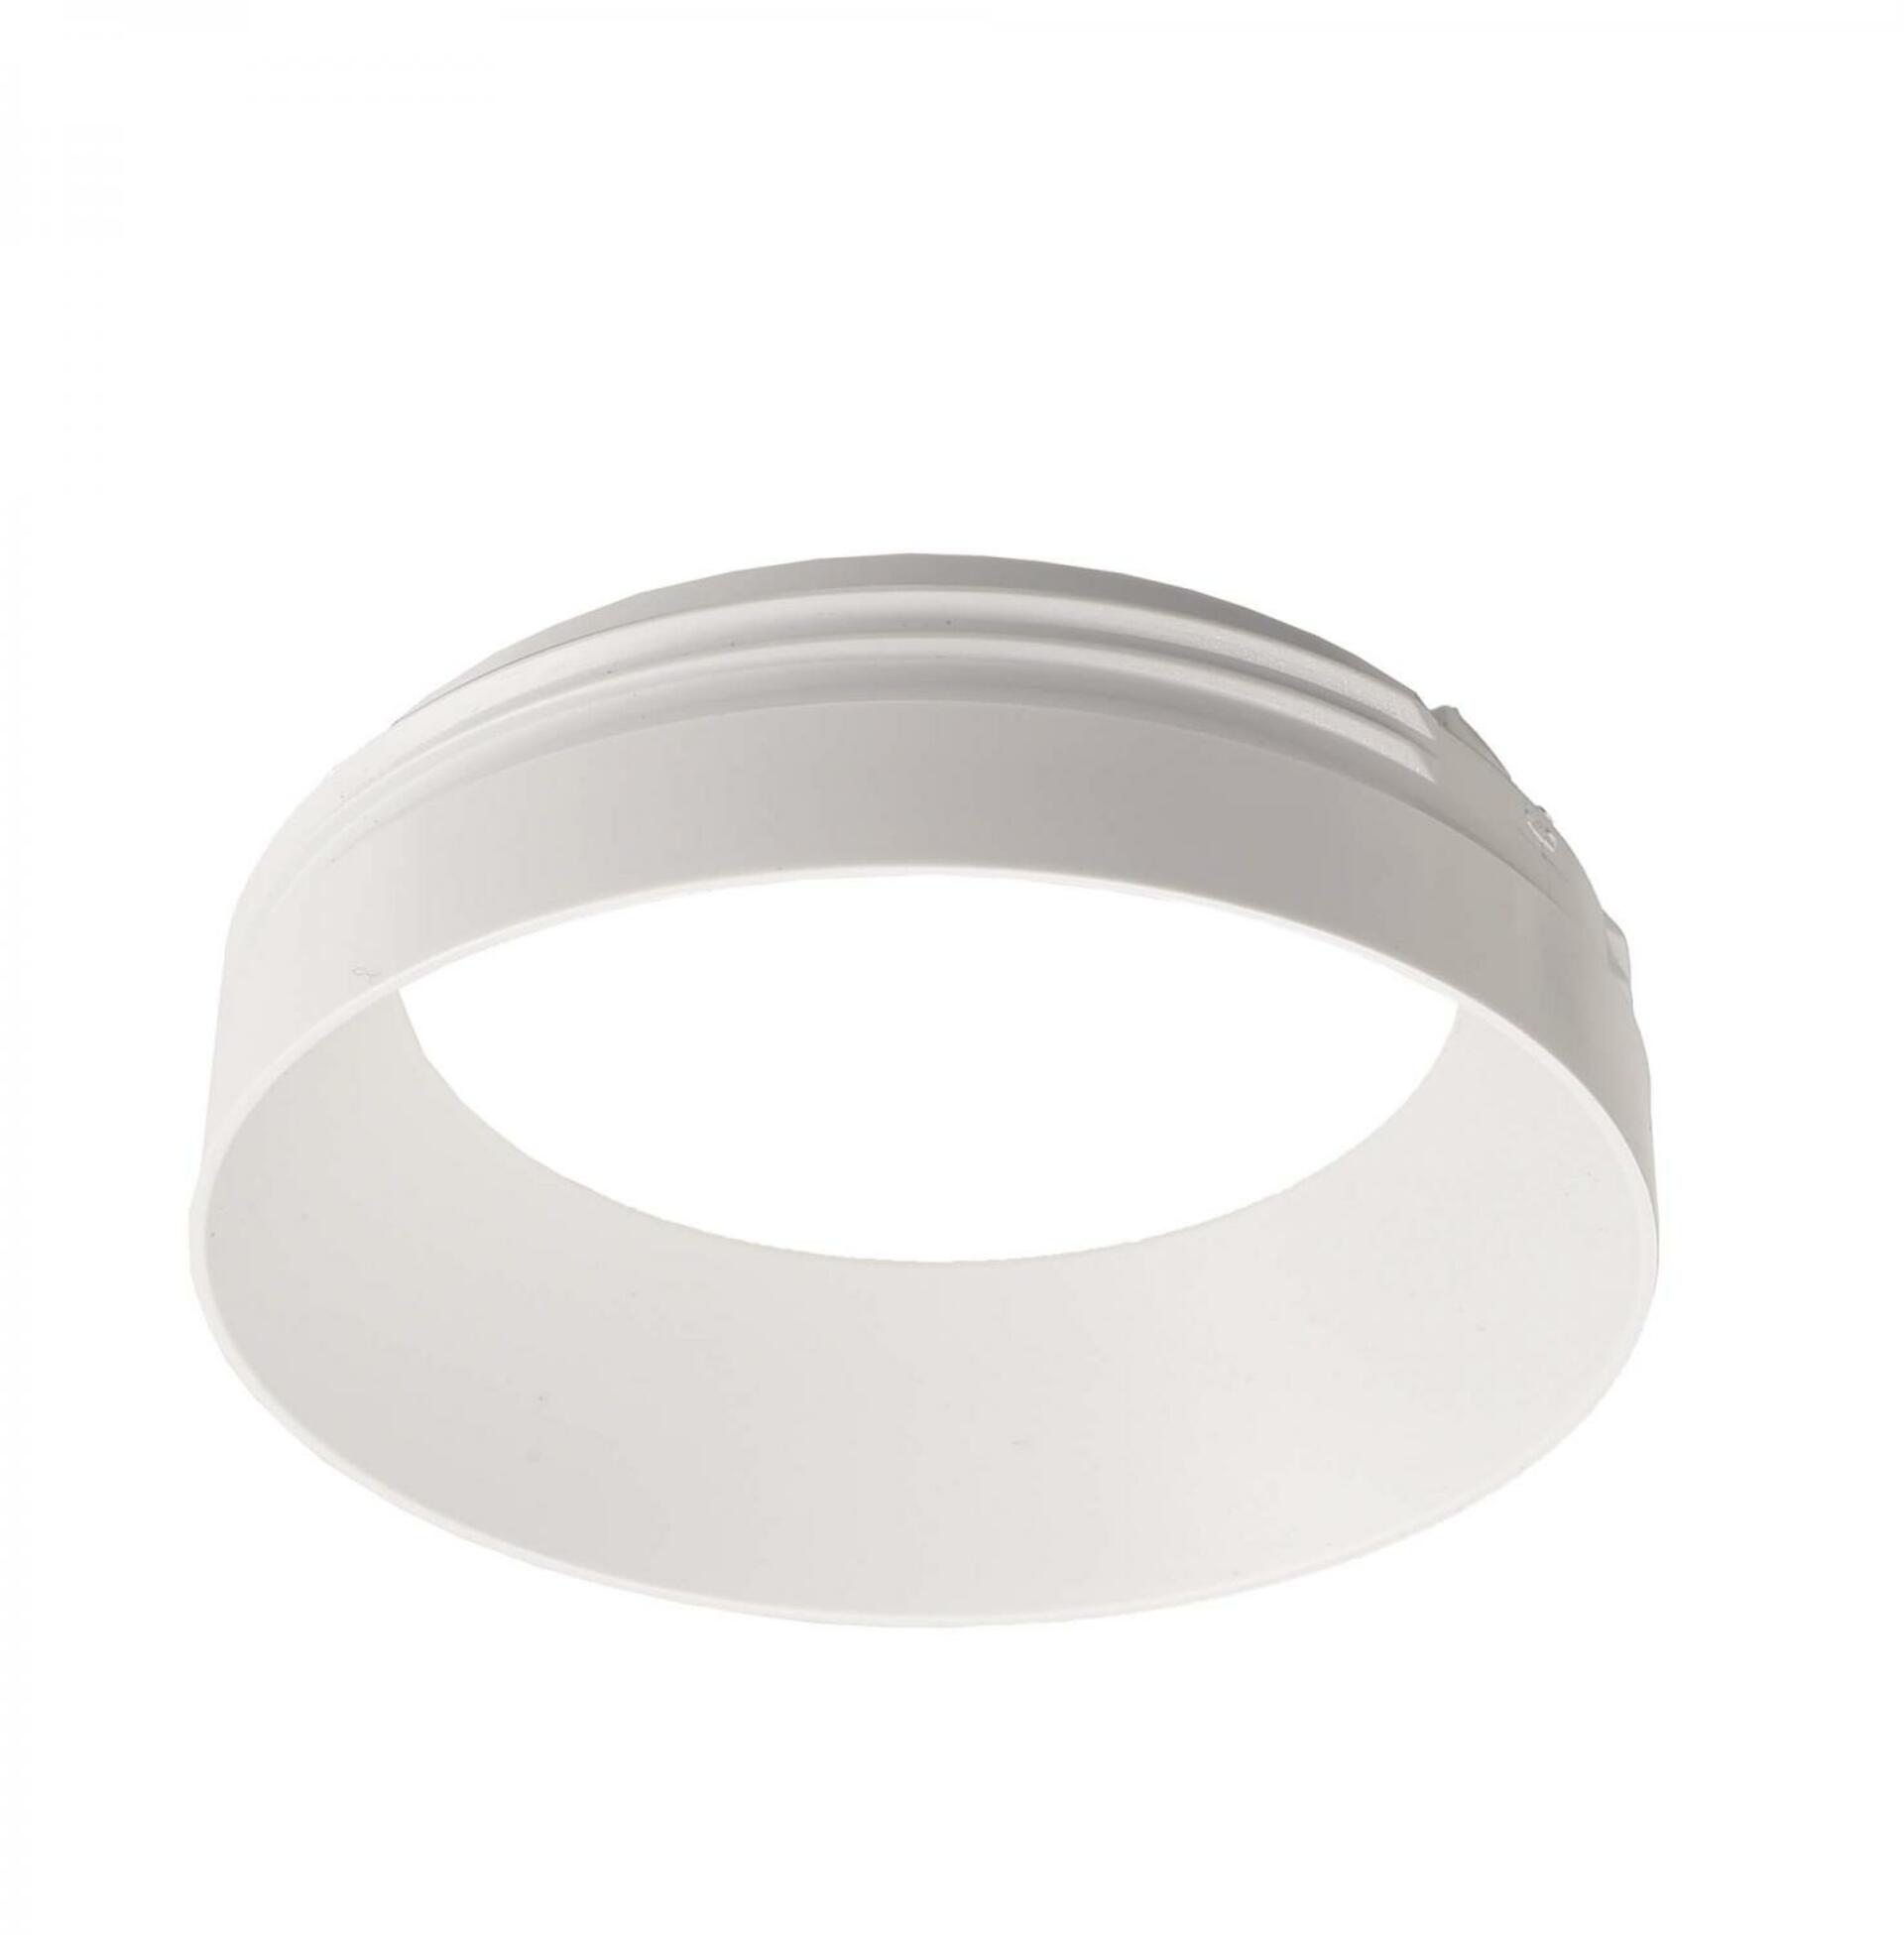 Light Impressions Deko-Light kroužek pro reflektor pro Lucea 15/20 bílá, délka 24 mm, průměr 82 mm 930759